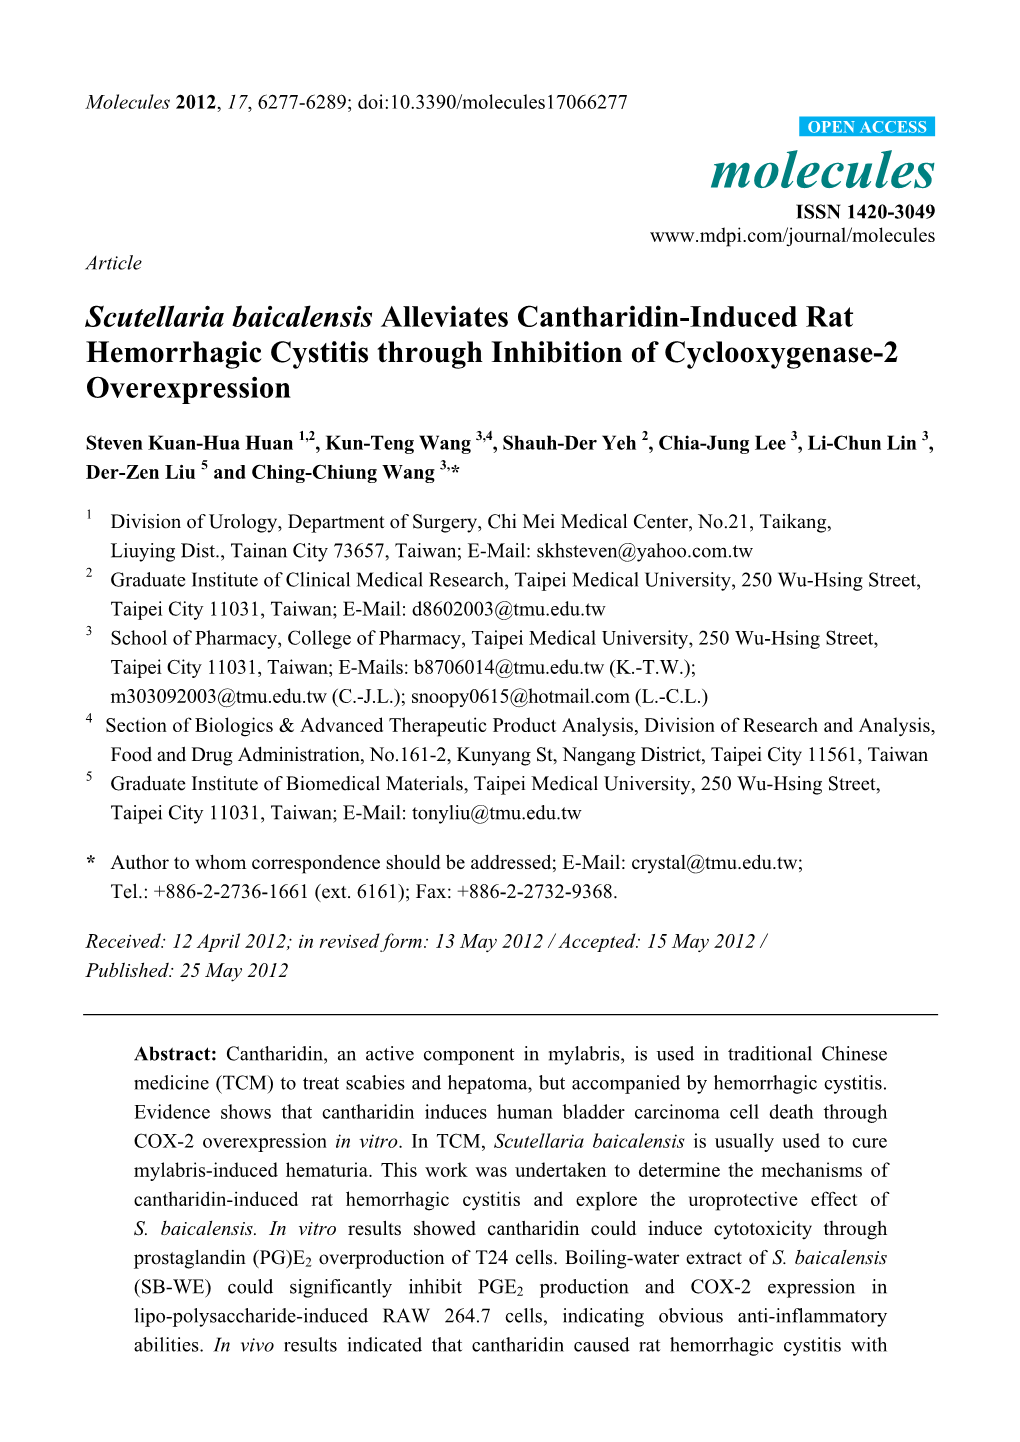 Scutellaria Baicalensis Alleviates Cantharidin-Induced Rat Hemorrhagic Cystitis Through Inhibition of Cyclooxygenase-2 Overexpression